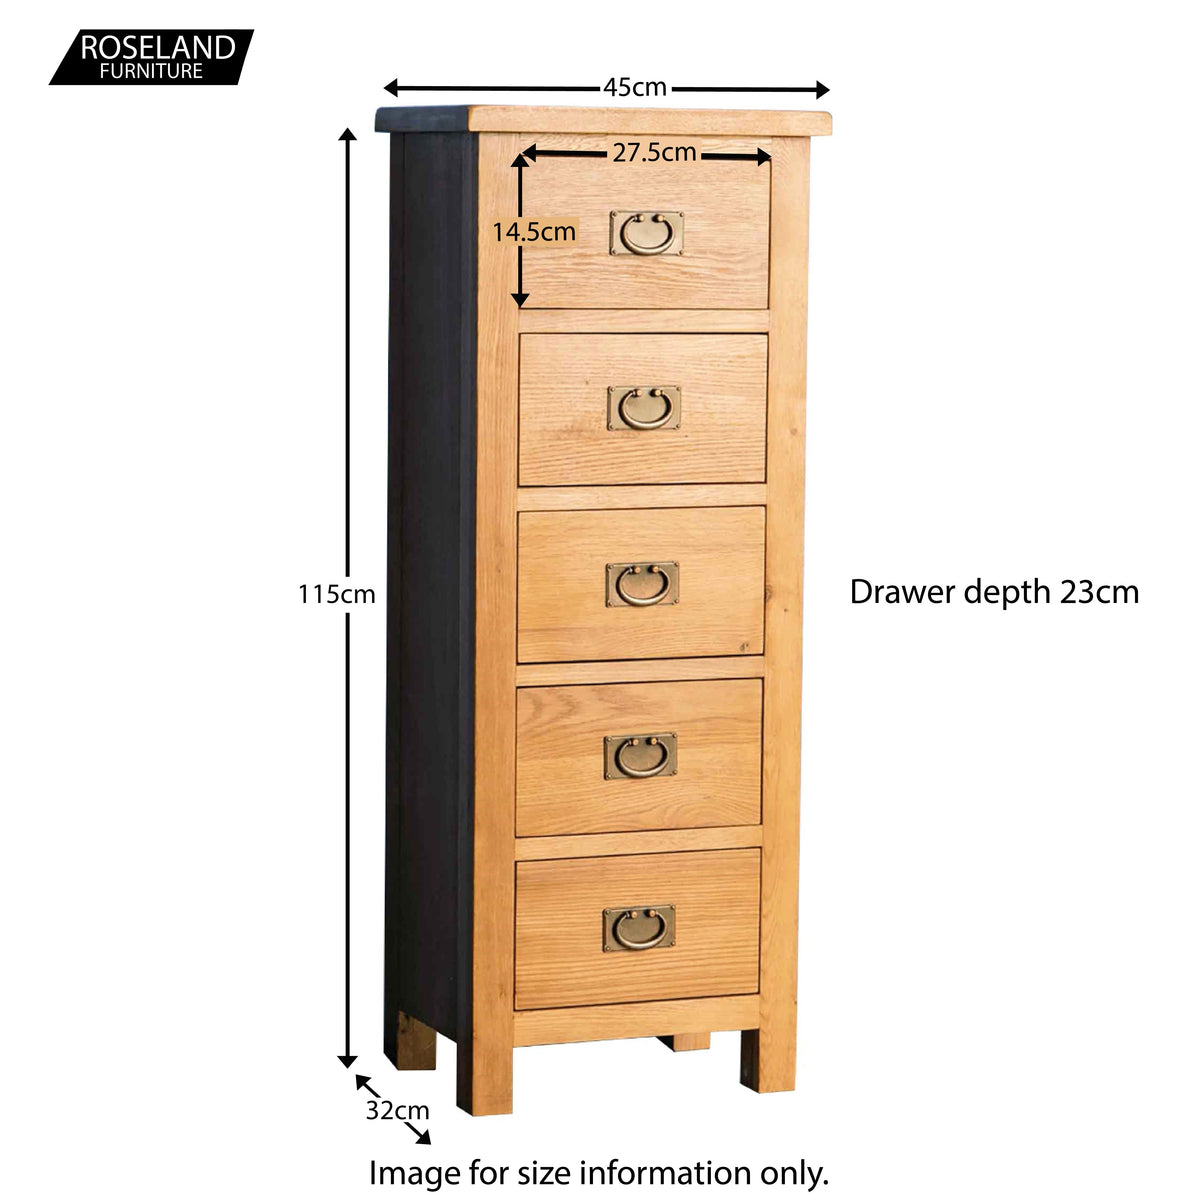 Surrey Oak 5 drawer tallboy chest - Size guide